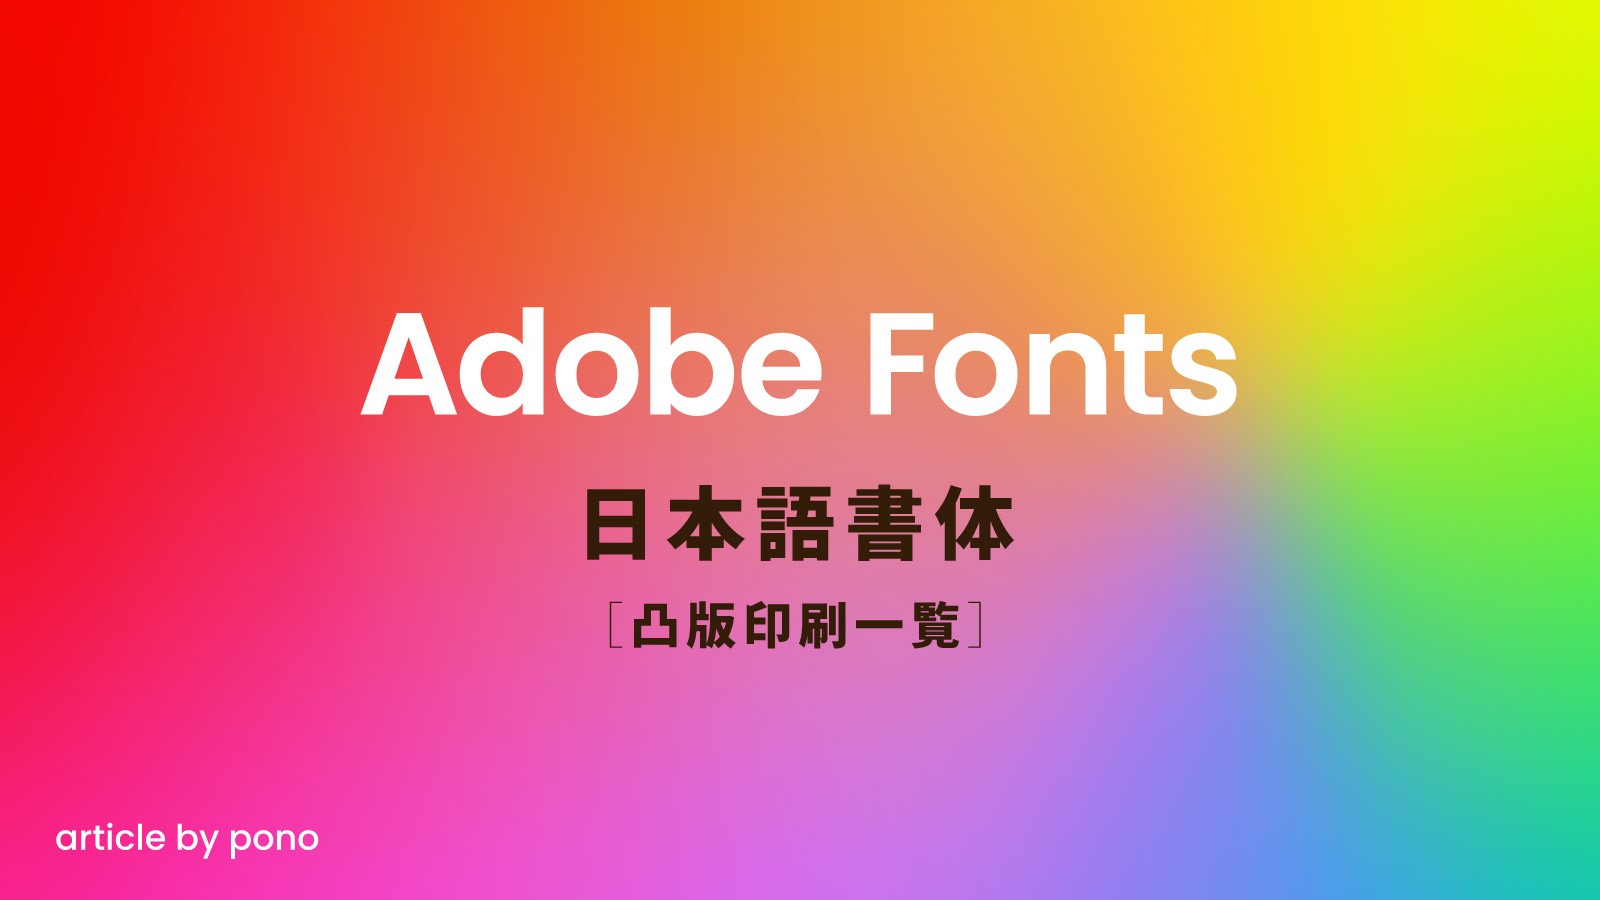 Adobeフォント 凸版印刷一覧